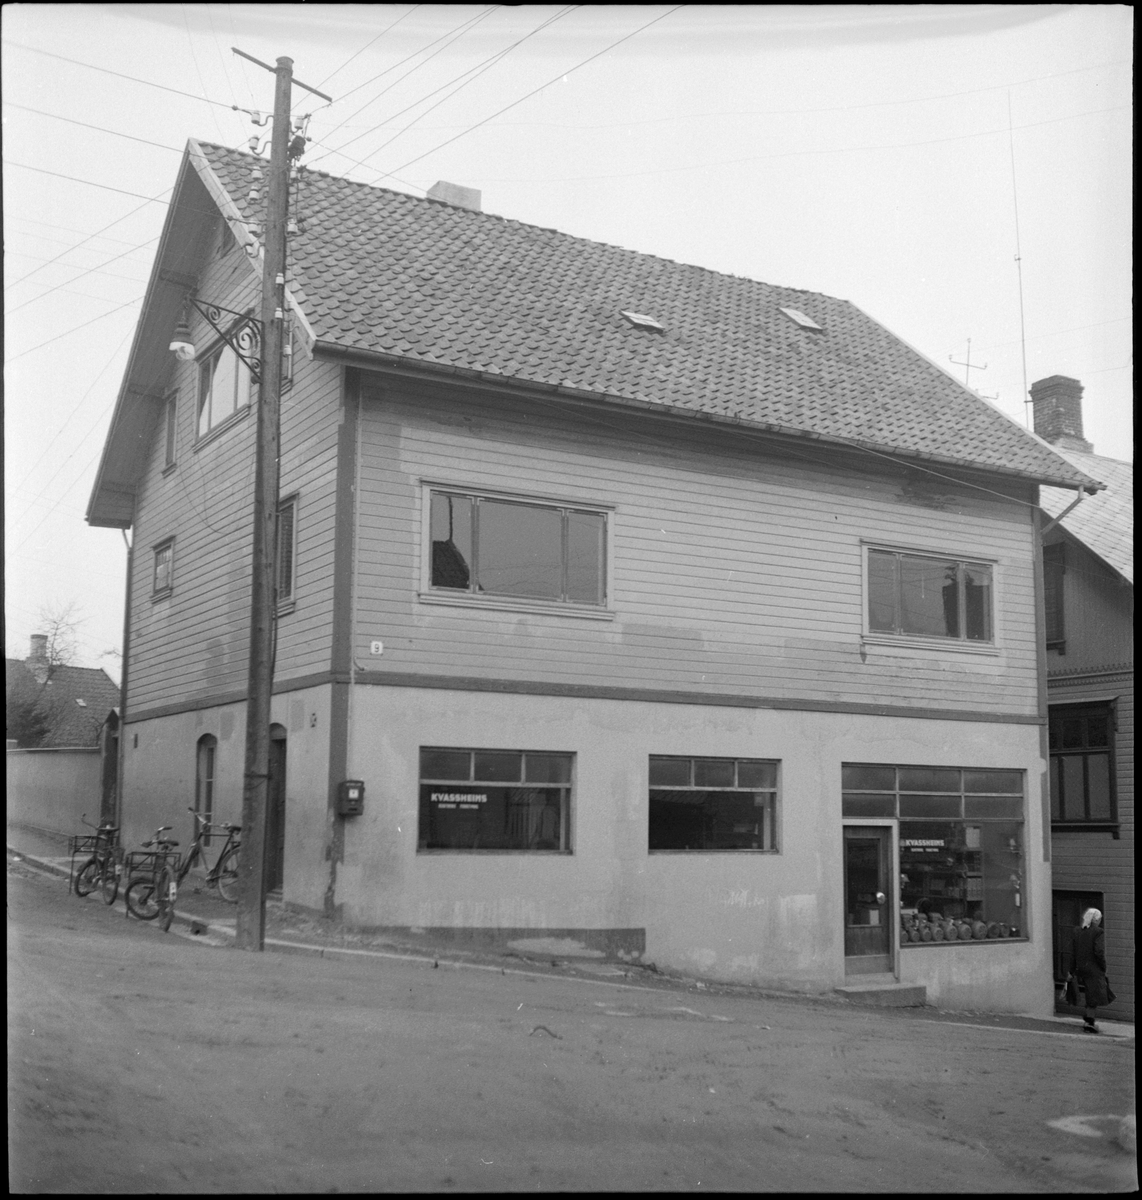 Kvassheim Elektriske forretning i Johan Feyers gate, Egersund. Per Danckes bokhandel ligger i nabobygget.